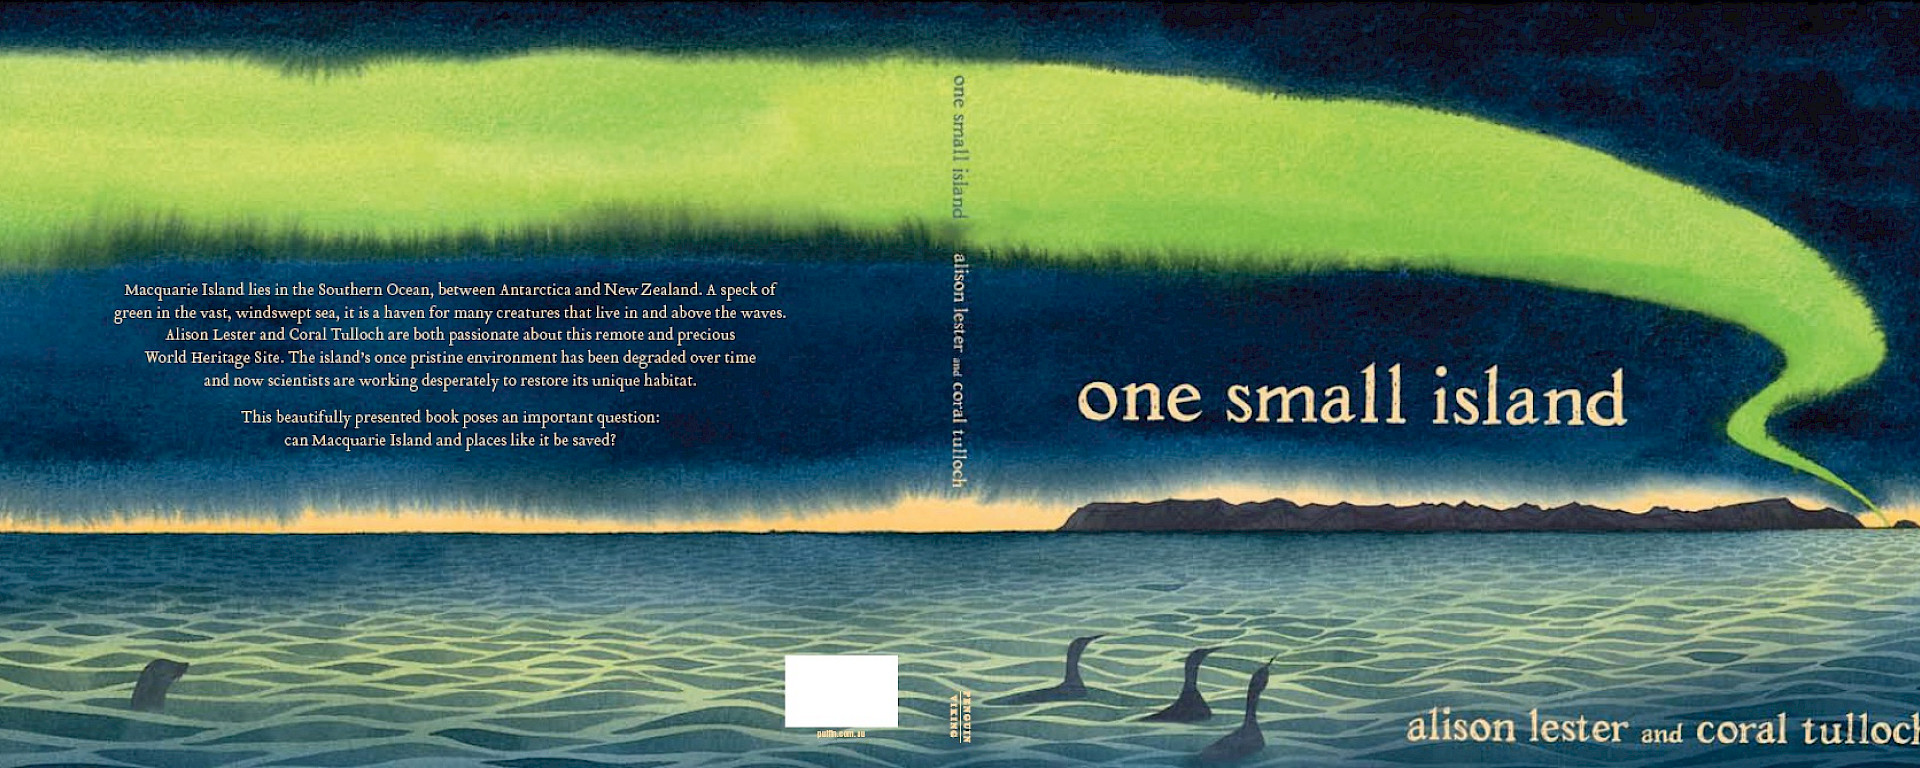 One Small Island book cover